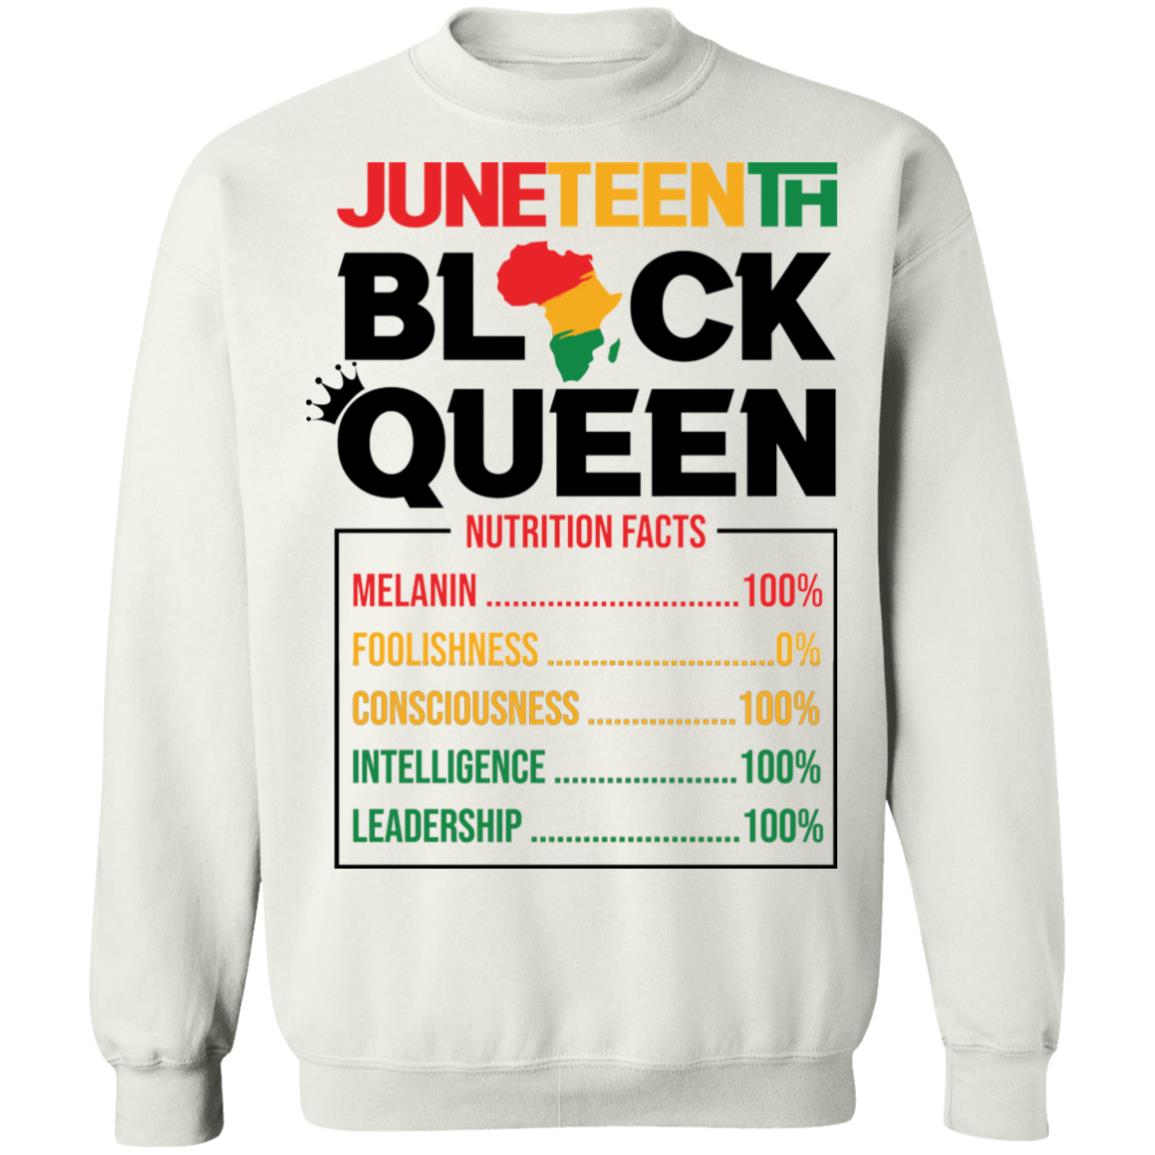 Juneteenth Black Queen Nutrition Facts T-shirt Apparel Gearment Crewneck Sweatshirt White S